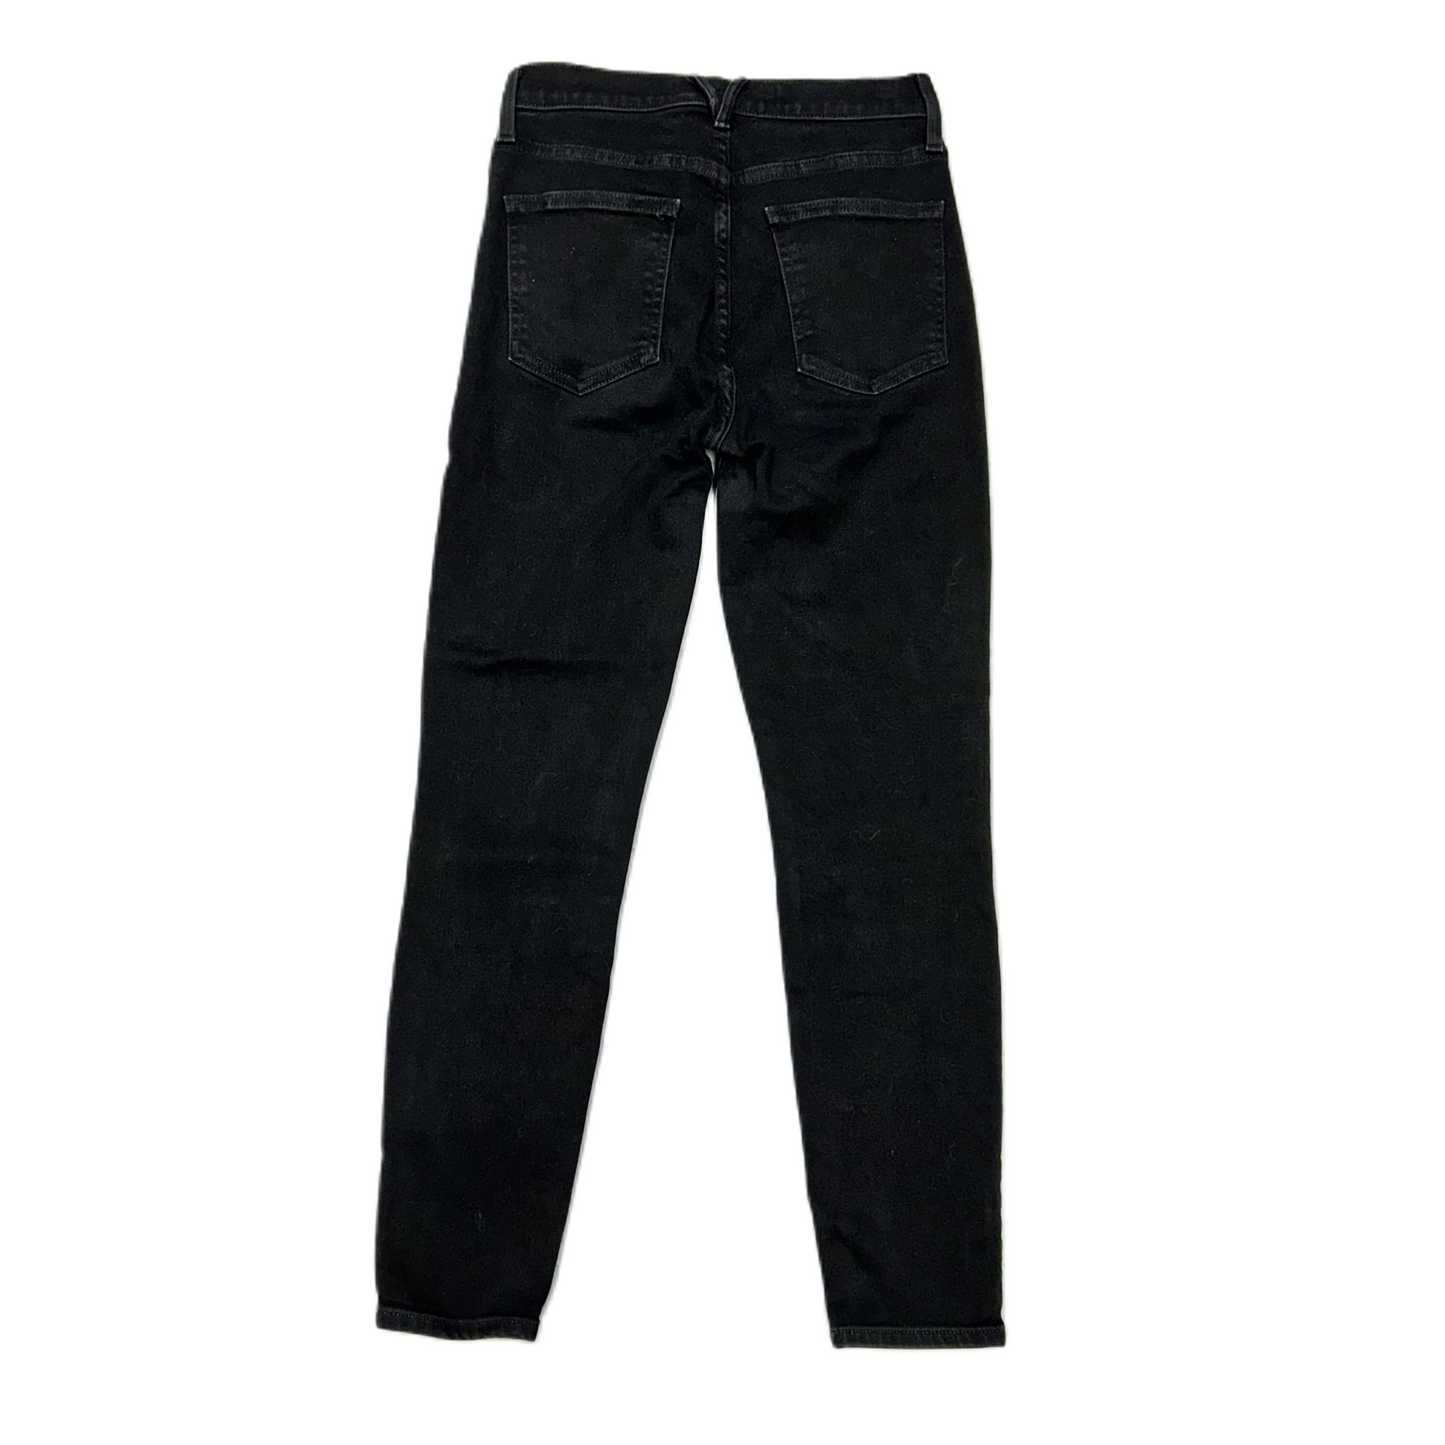 Black Denim Jeans Designer By Veronica Beard, Size: 2